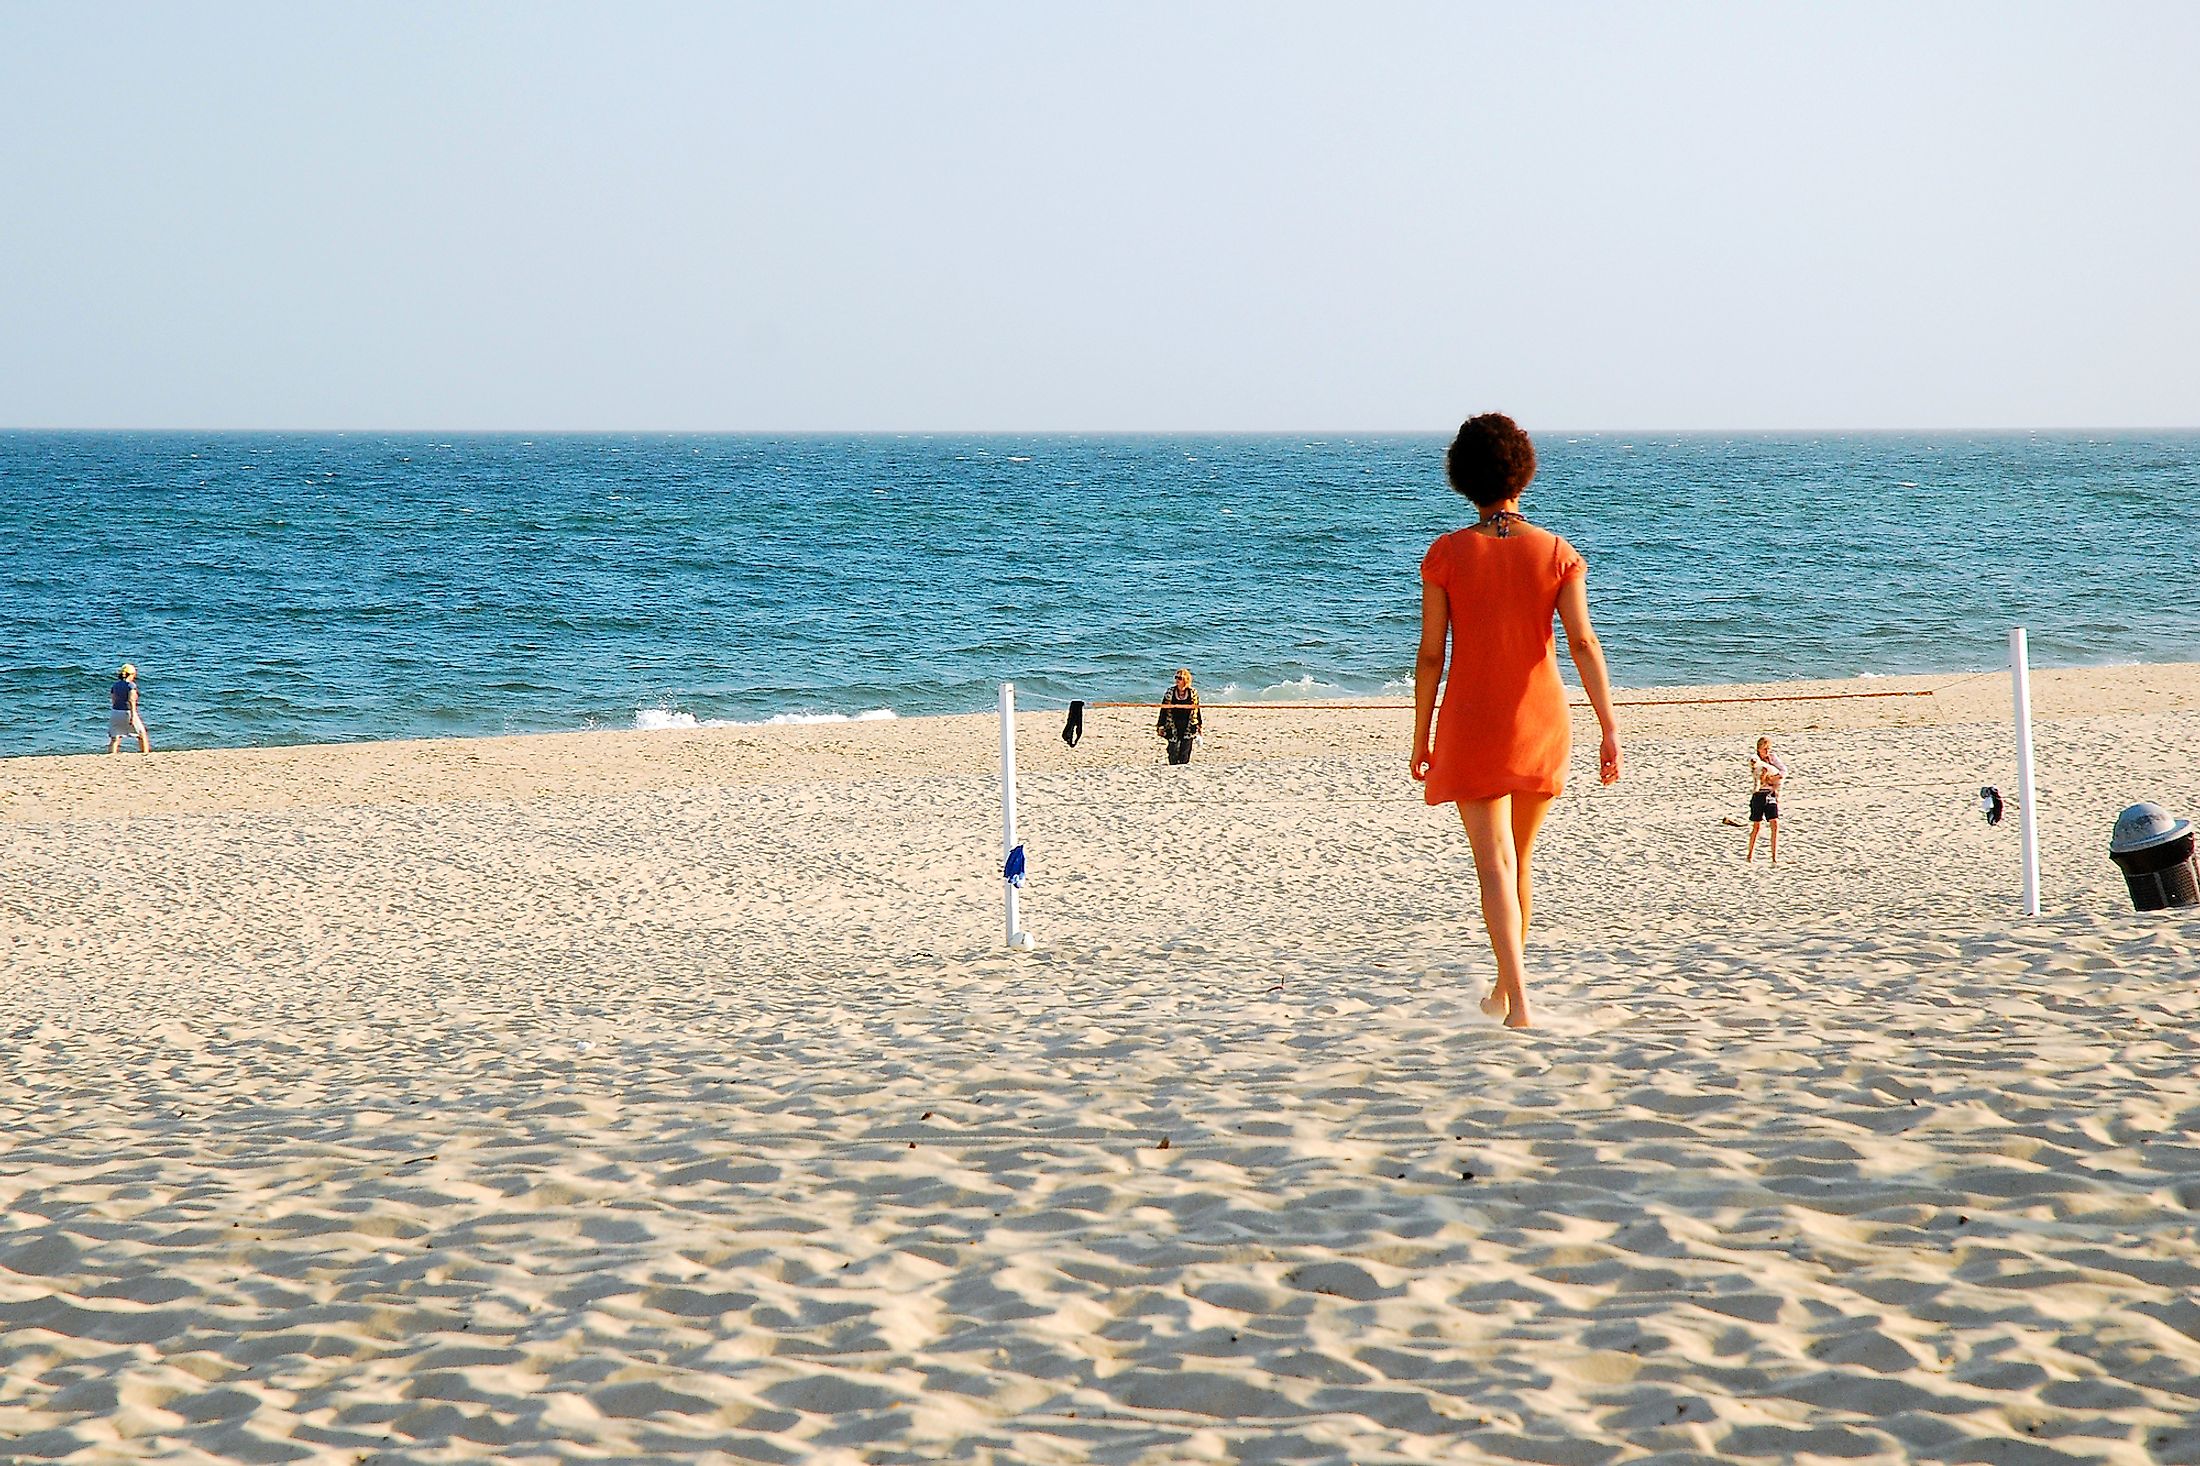 The main beach in East Hampton. Editorial credit: James Kirkikis / Shutterstock.com